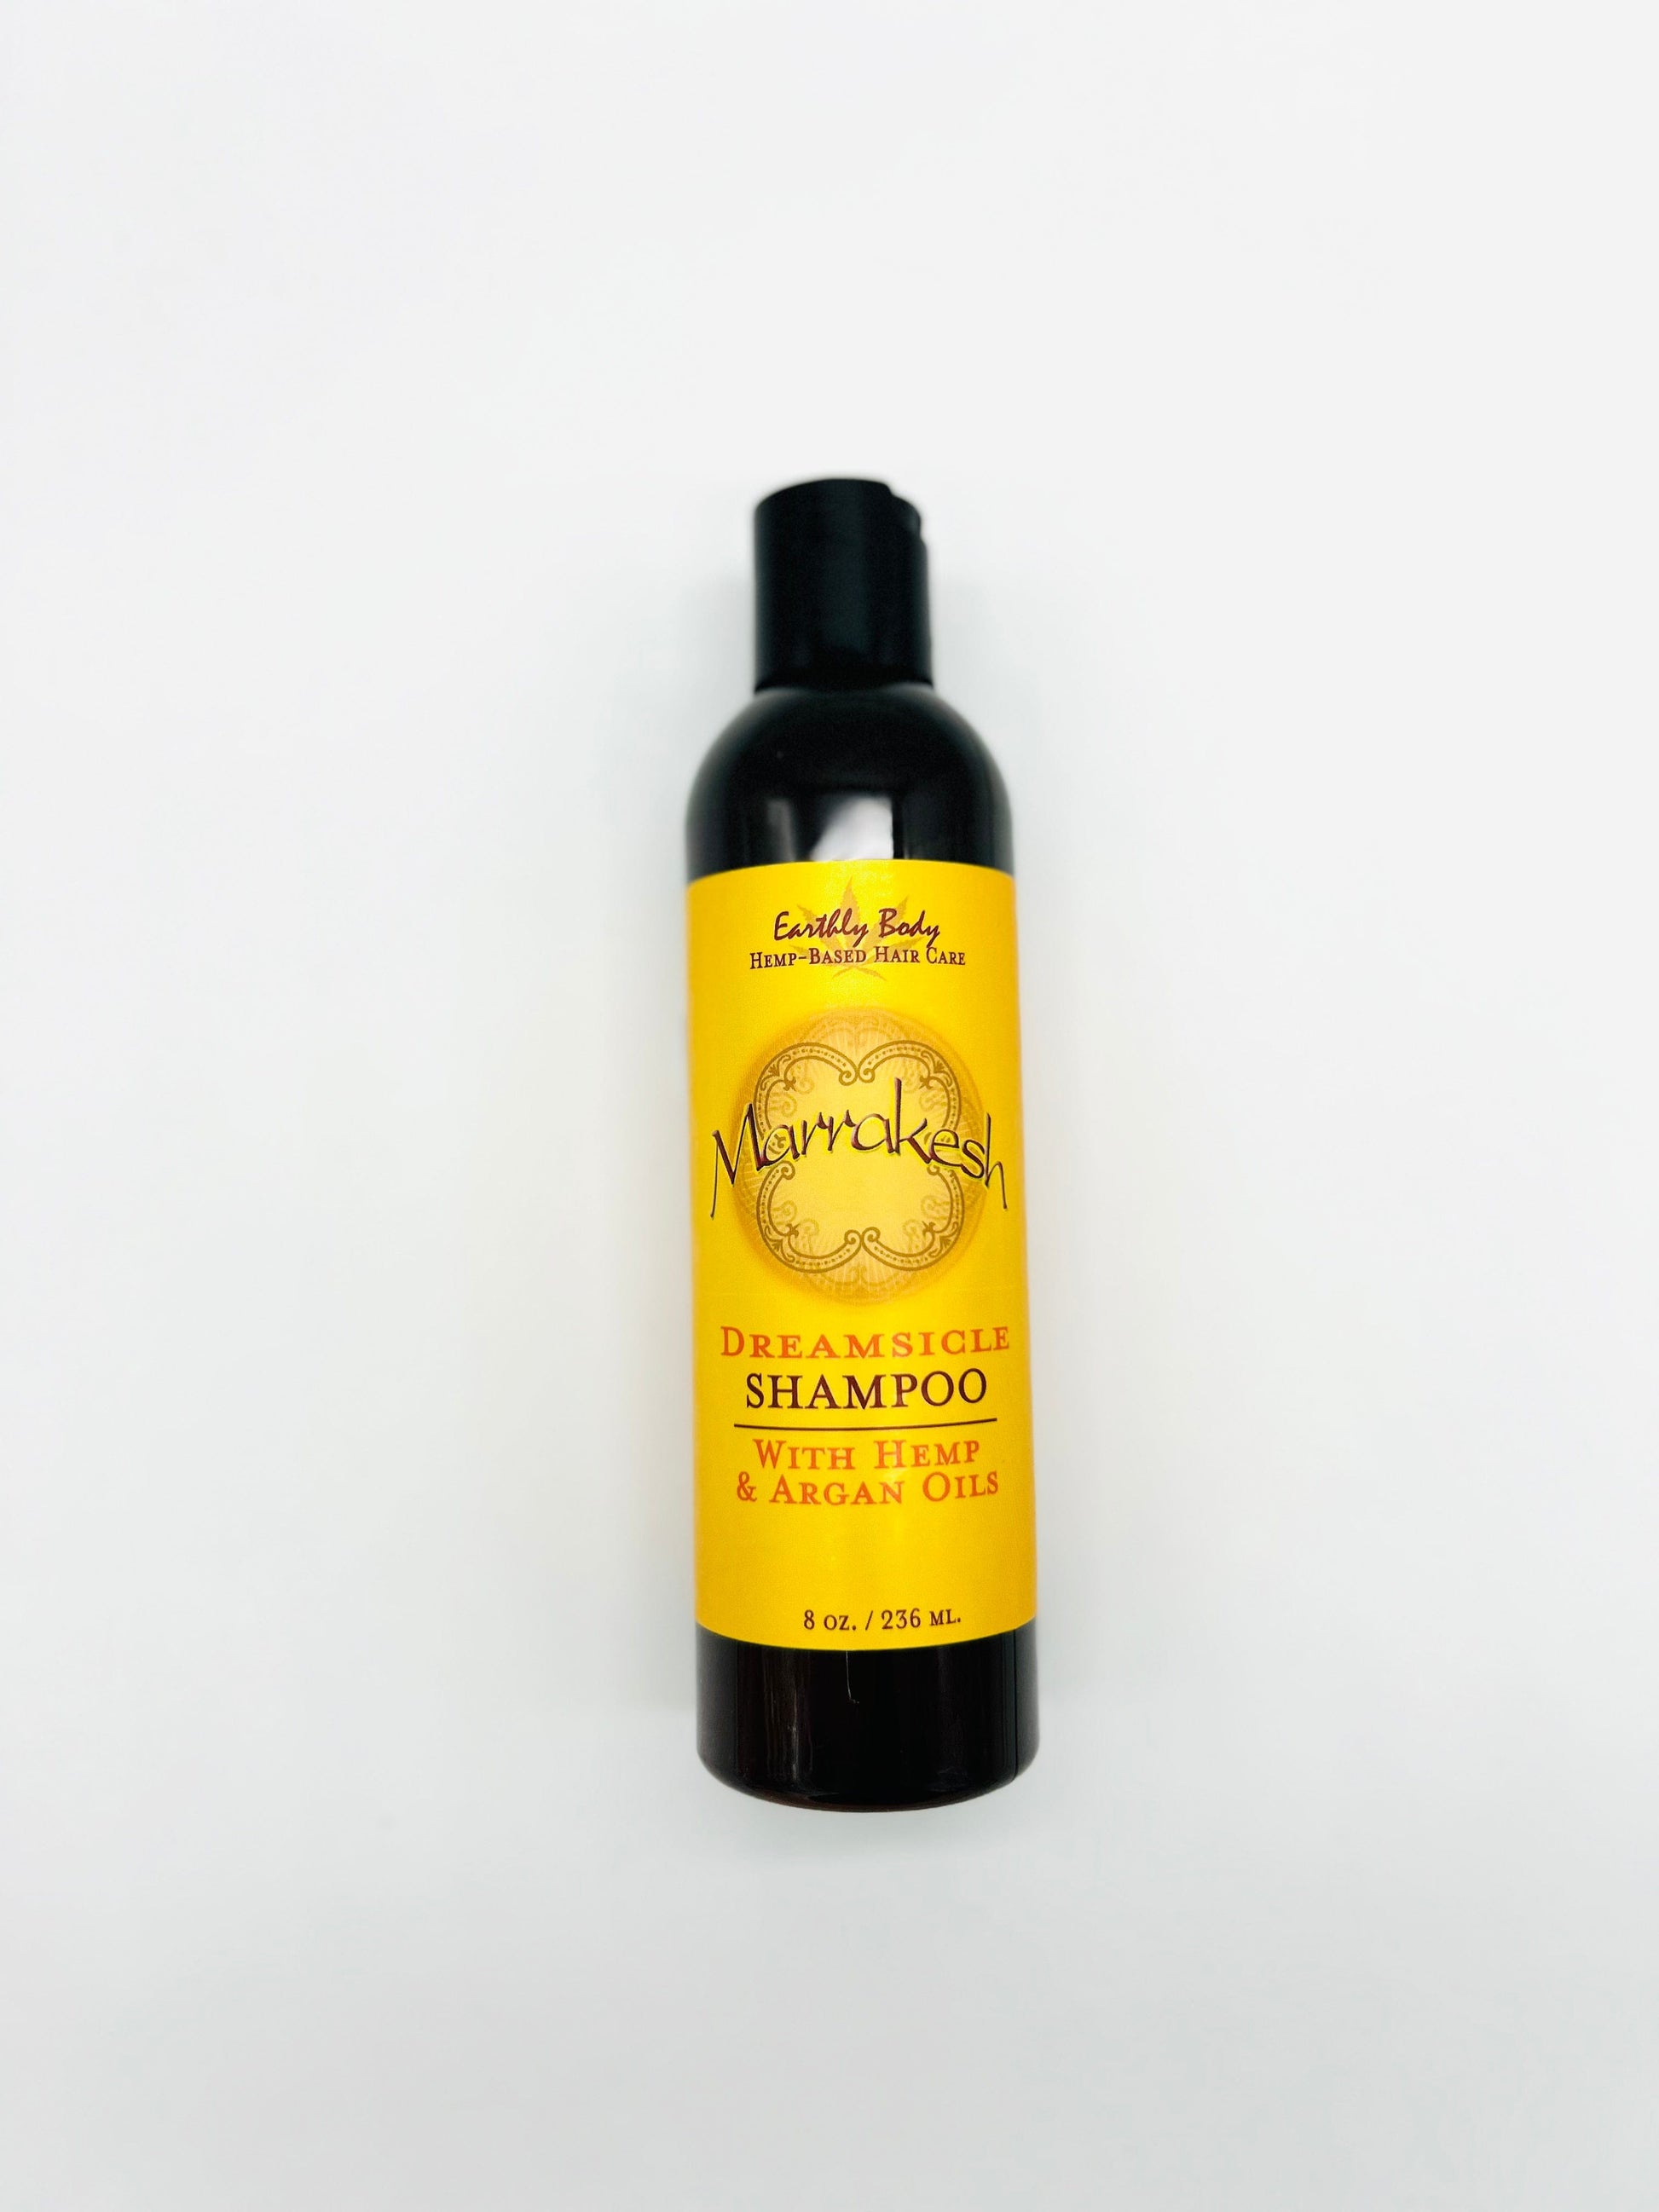 Argan Oil Shampoo Earthly Body Marrakesh Dreamsicle with Hemp 8 oz Shampoo